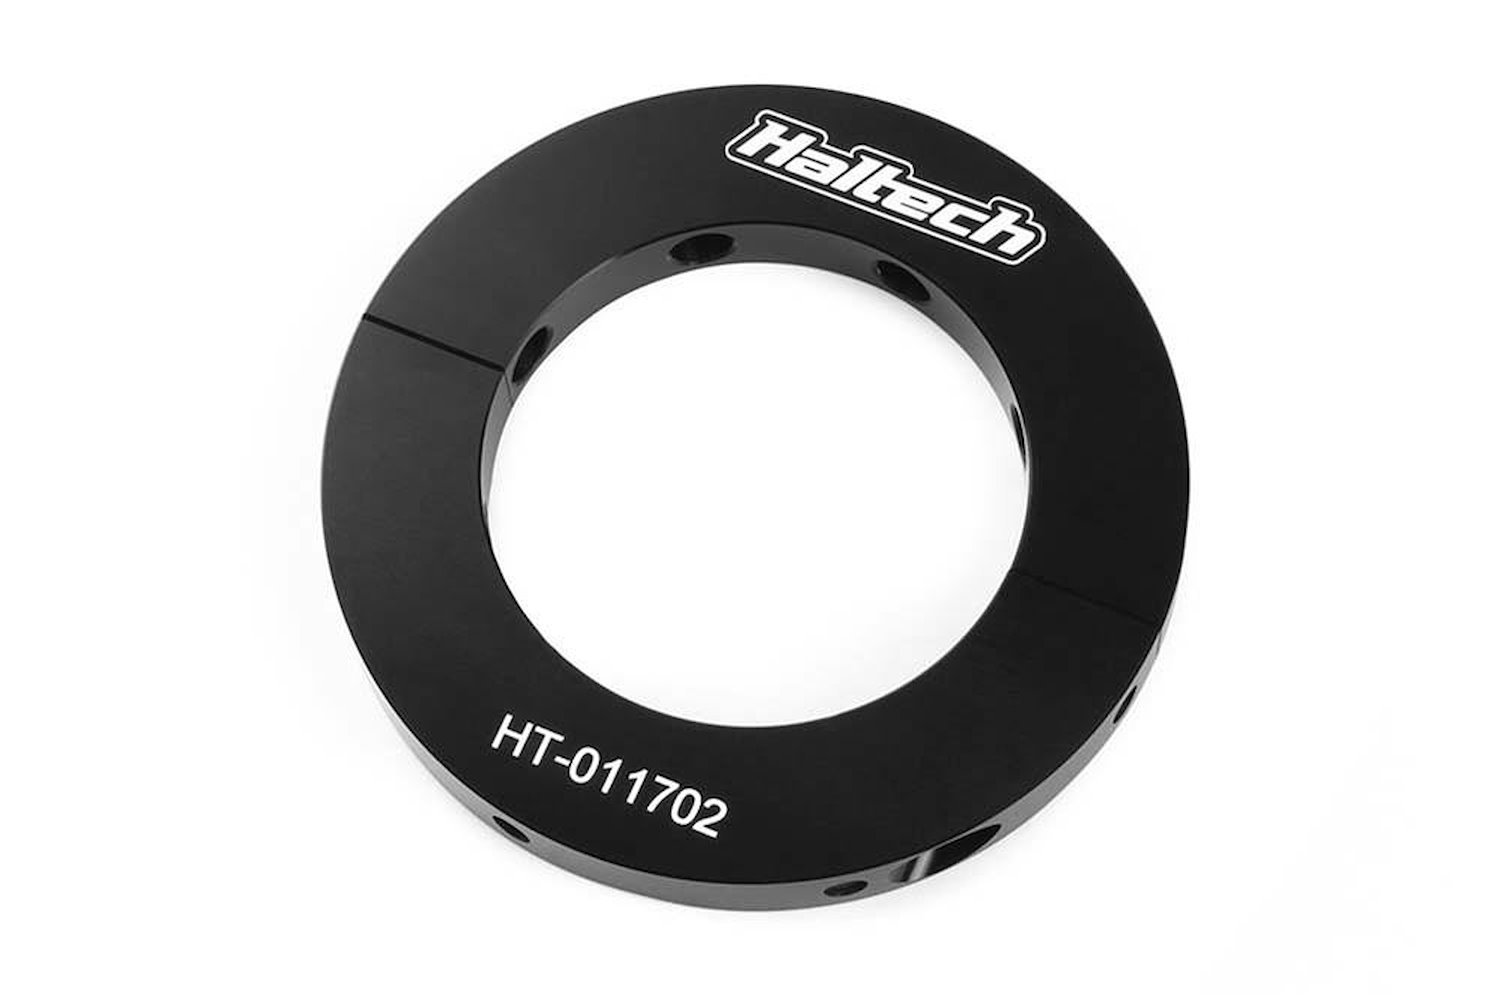 HT-011702 Driveshaft Split Collar, 2.125 in./ 53.98 mm I.D., 8 Magnet